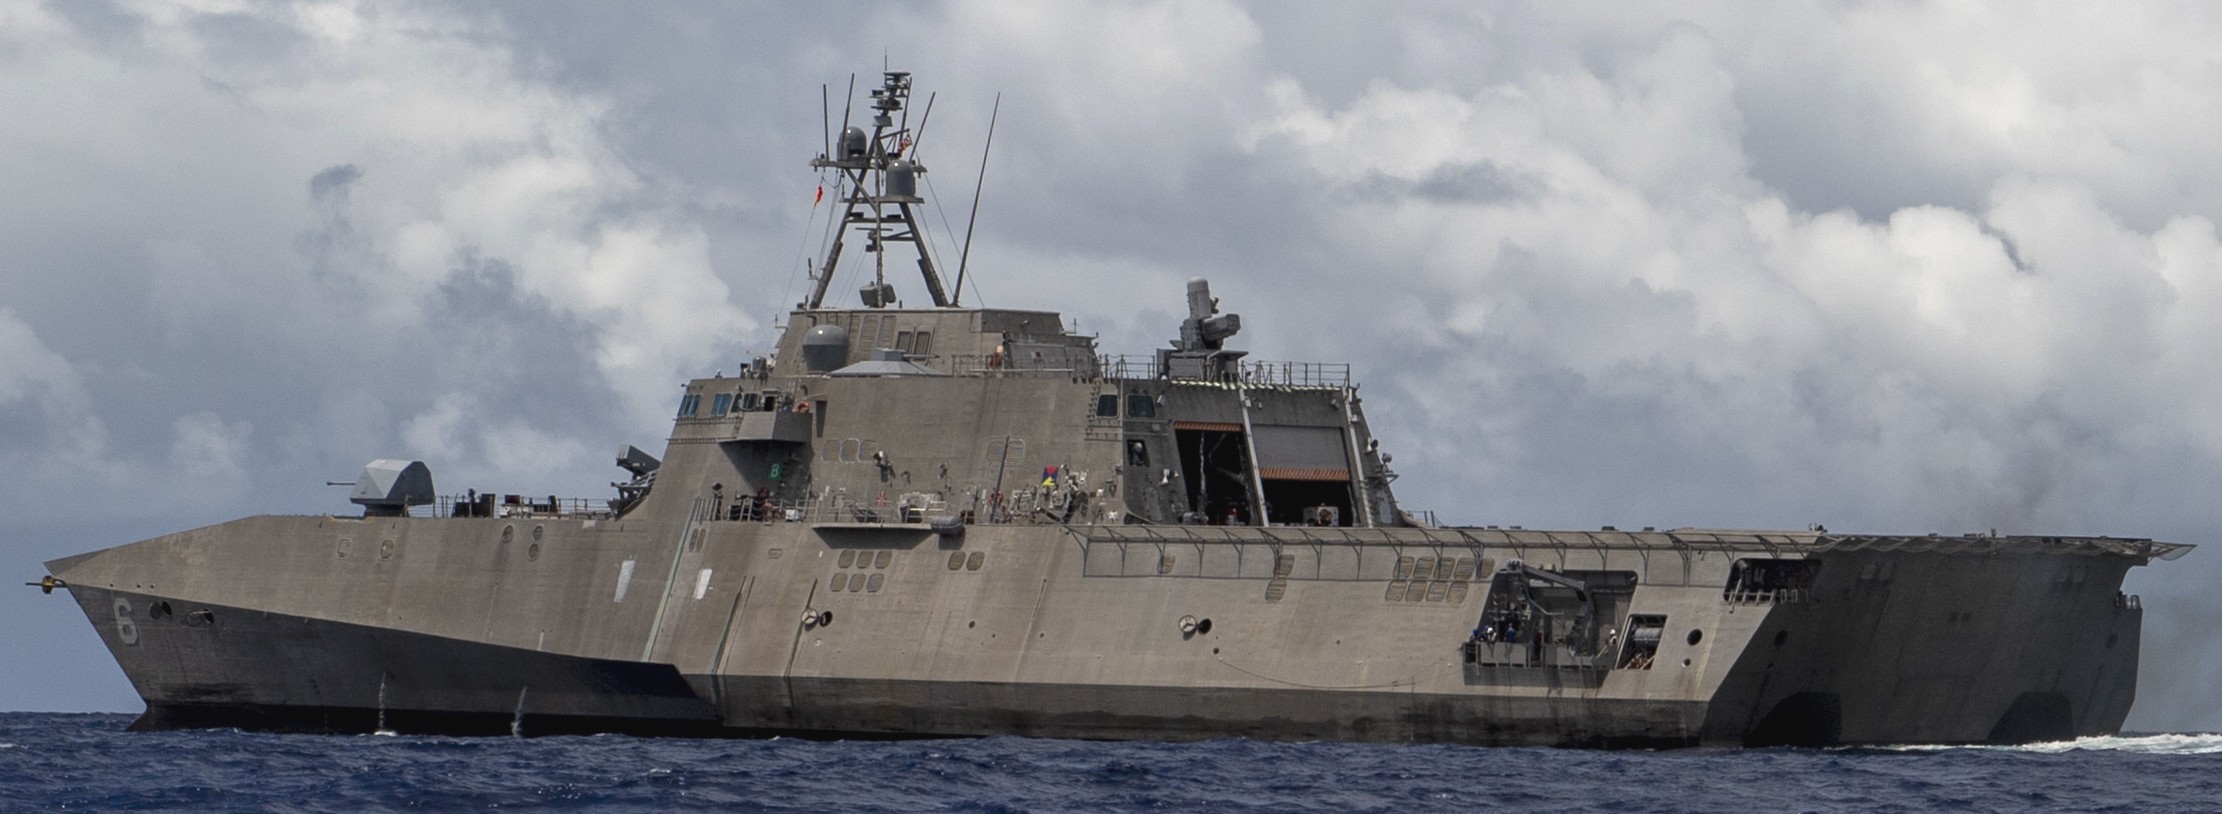 lcs-6 uss jackson independence class littoral combat ship us navy 29